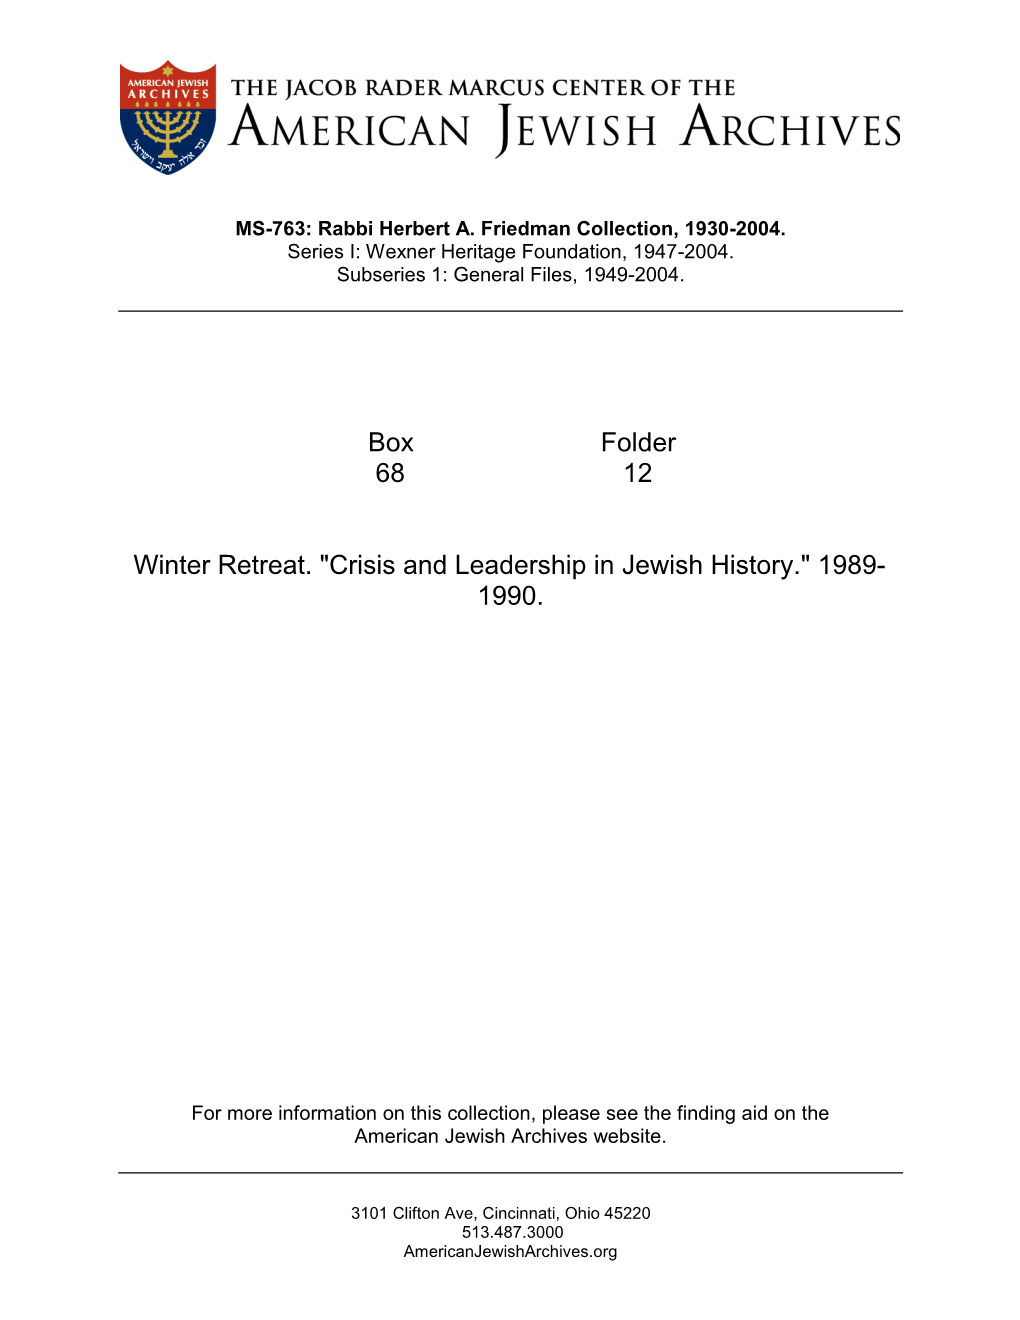 Crisis and Leadership in Jewish History." 1989- 1990